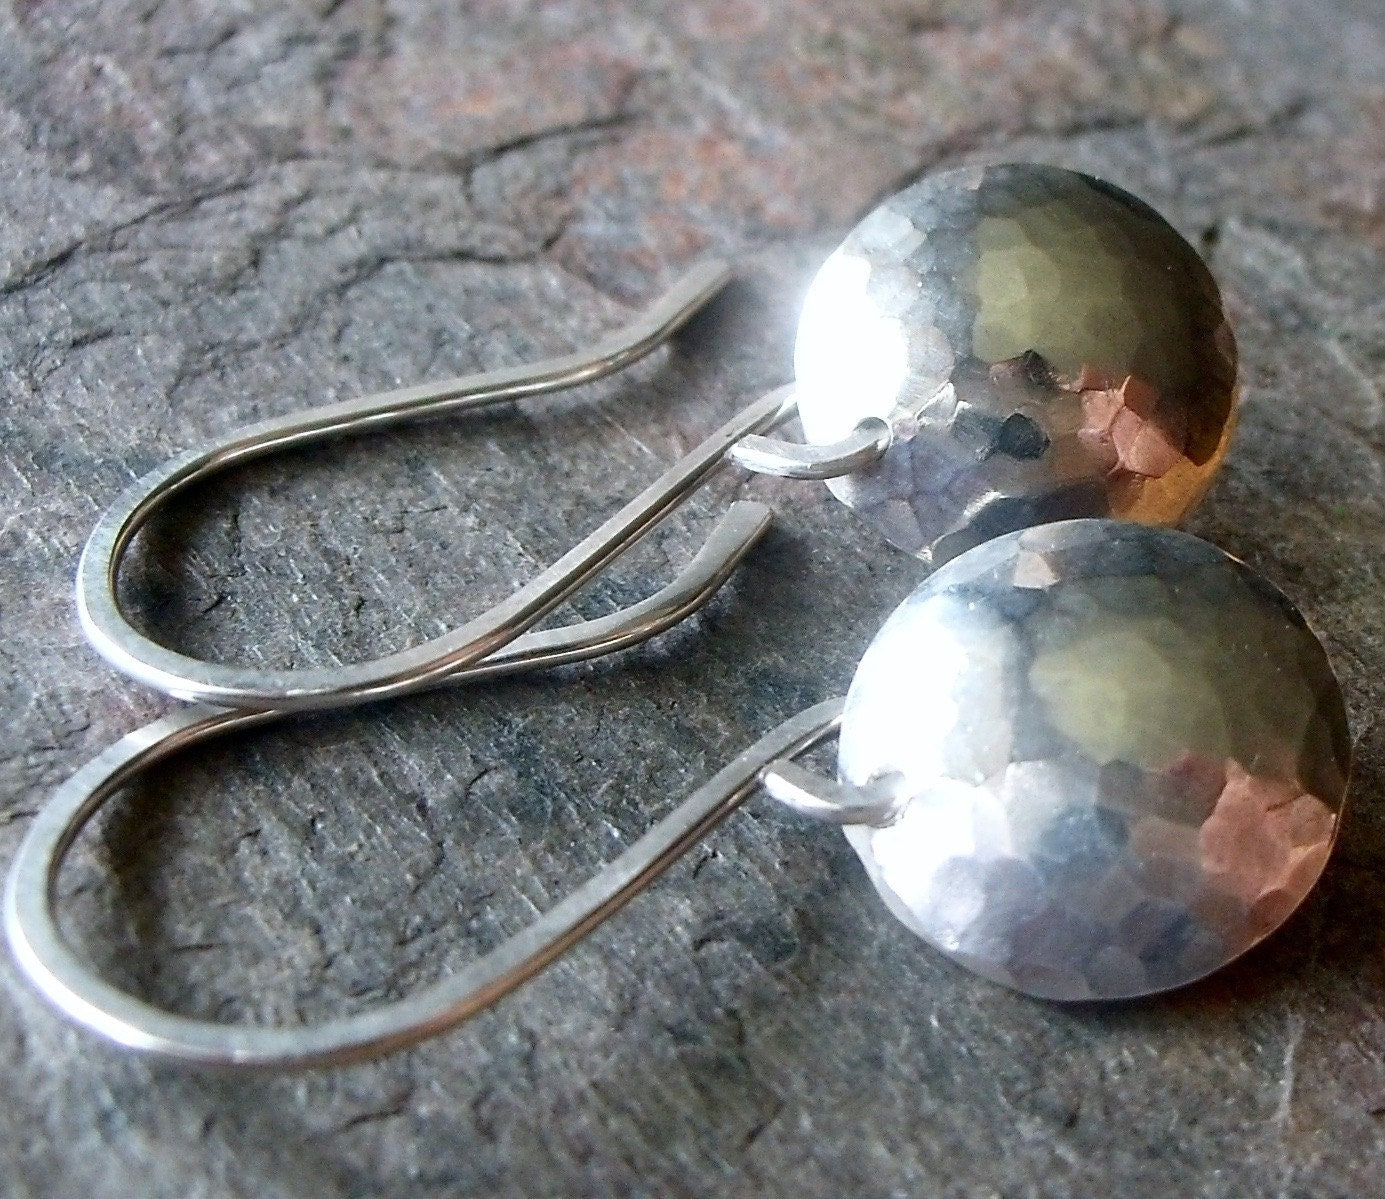 Sterling Silver Handformed and Hammered Earrings - Simple, Modern, Everyday Sterling Silver Earrings